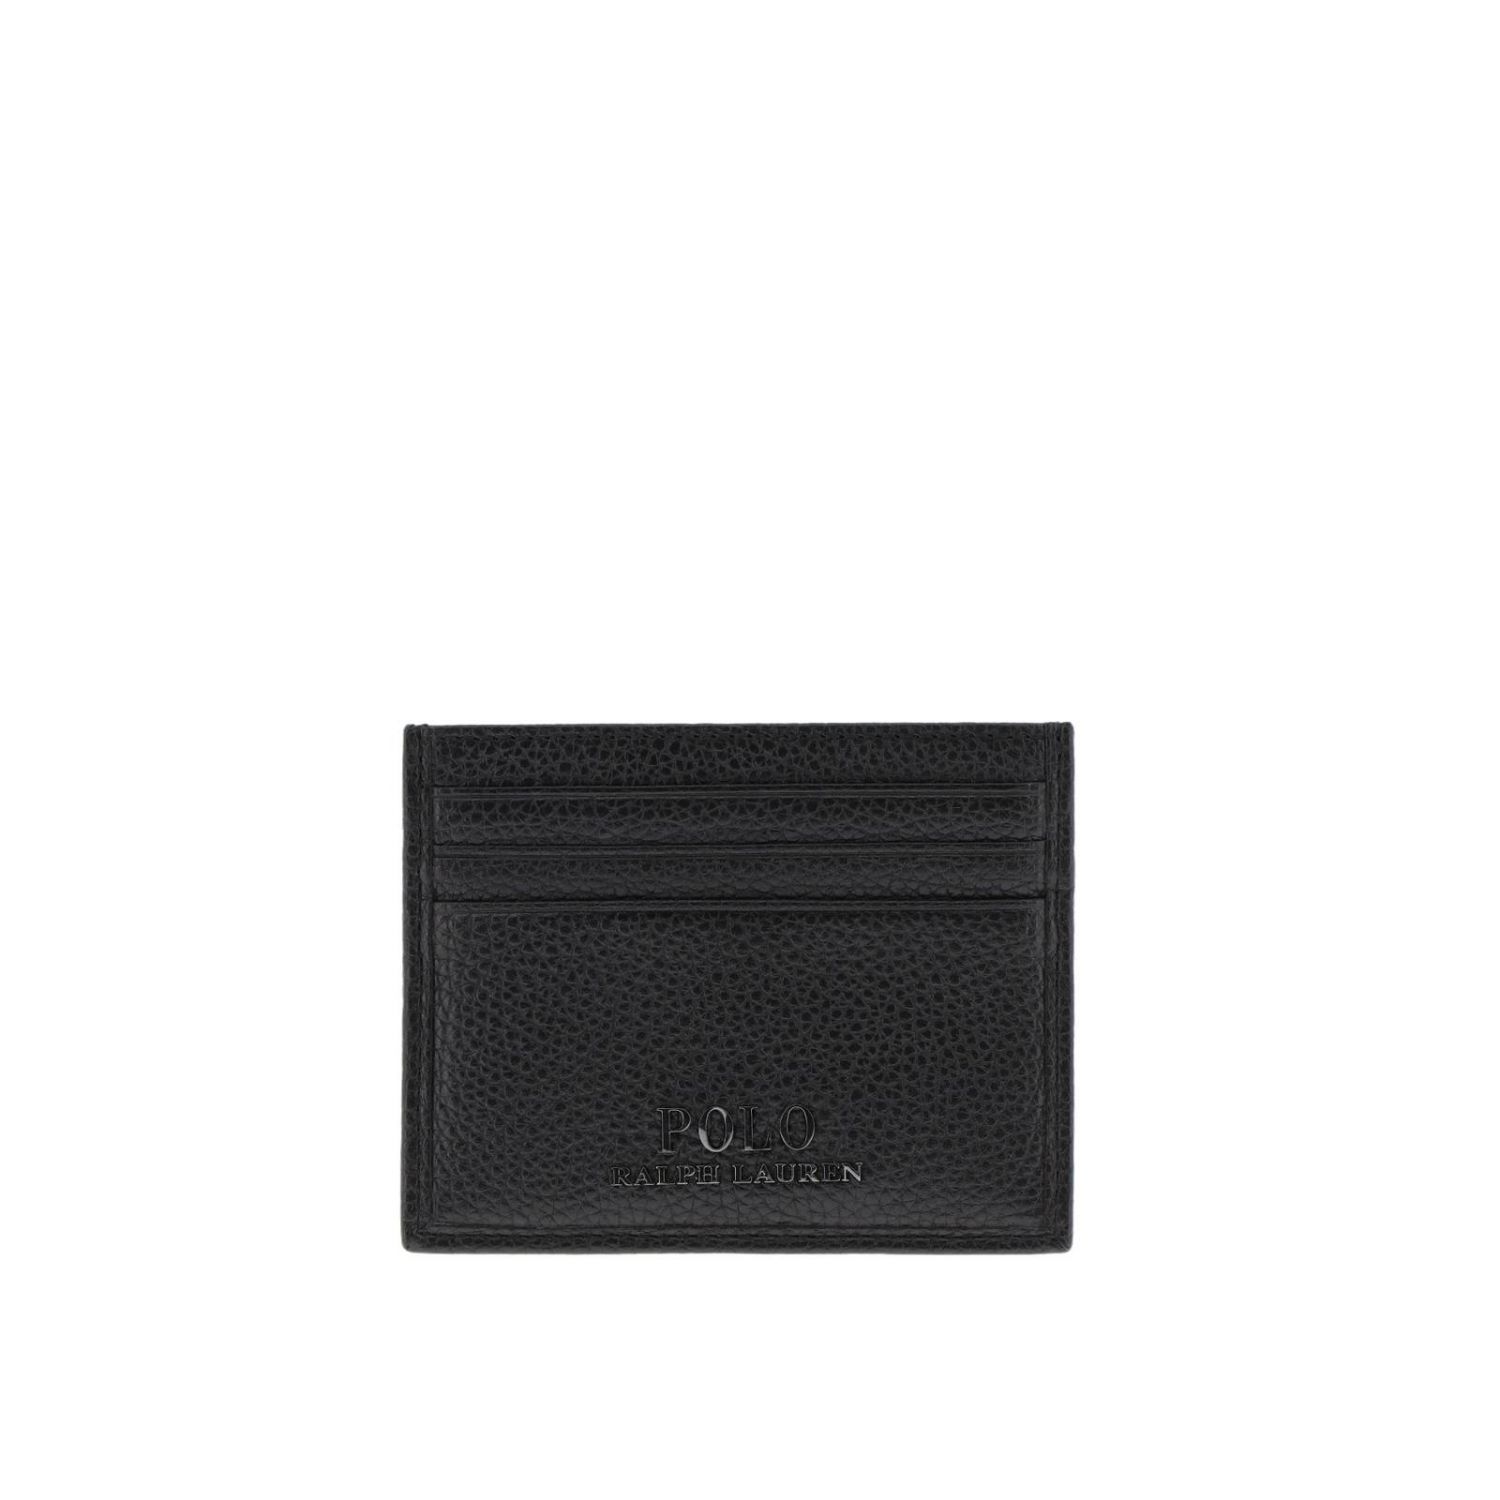 Polo Ralph Lauren Outlet: Wallet men | Wallet Polo Ralph Lauren Men ...